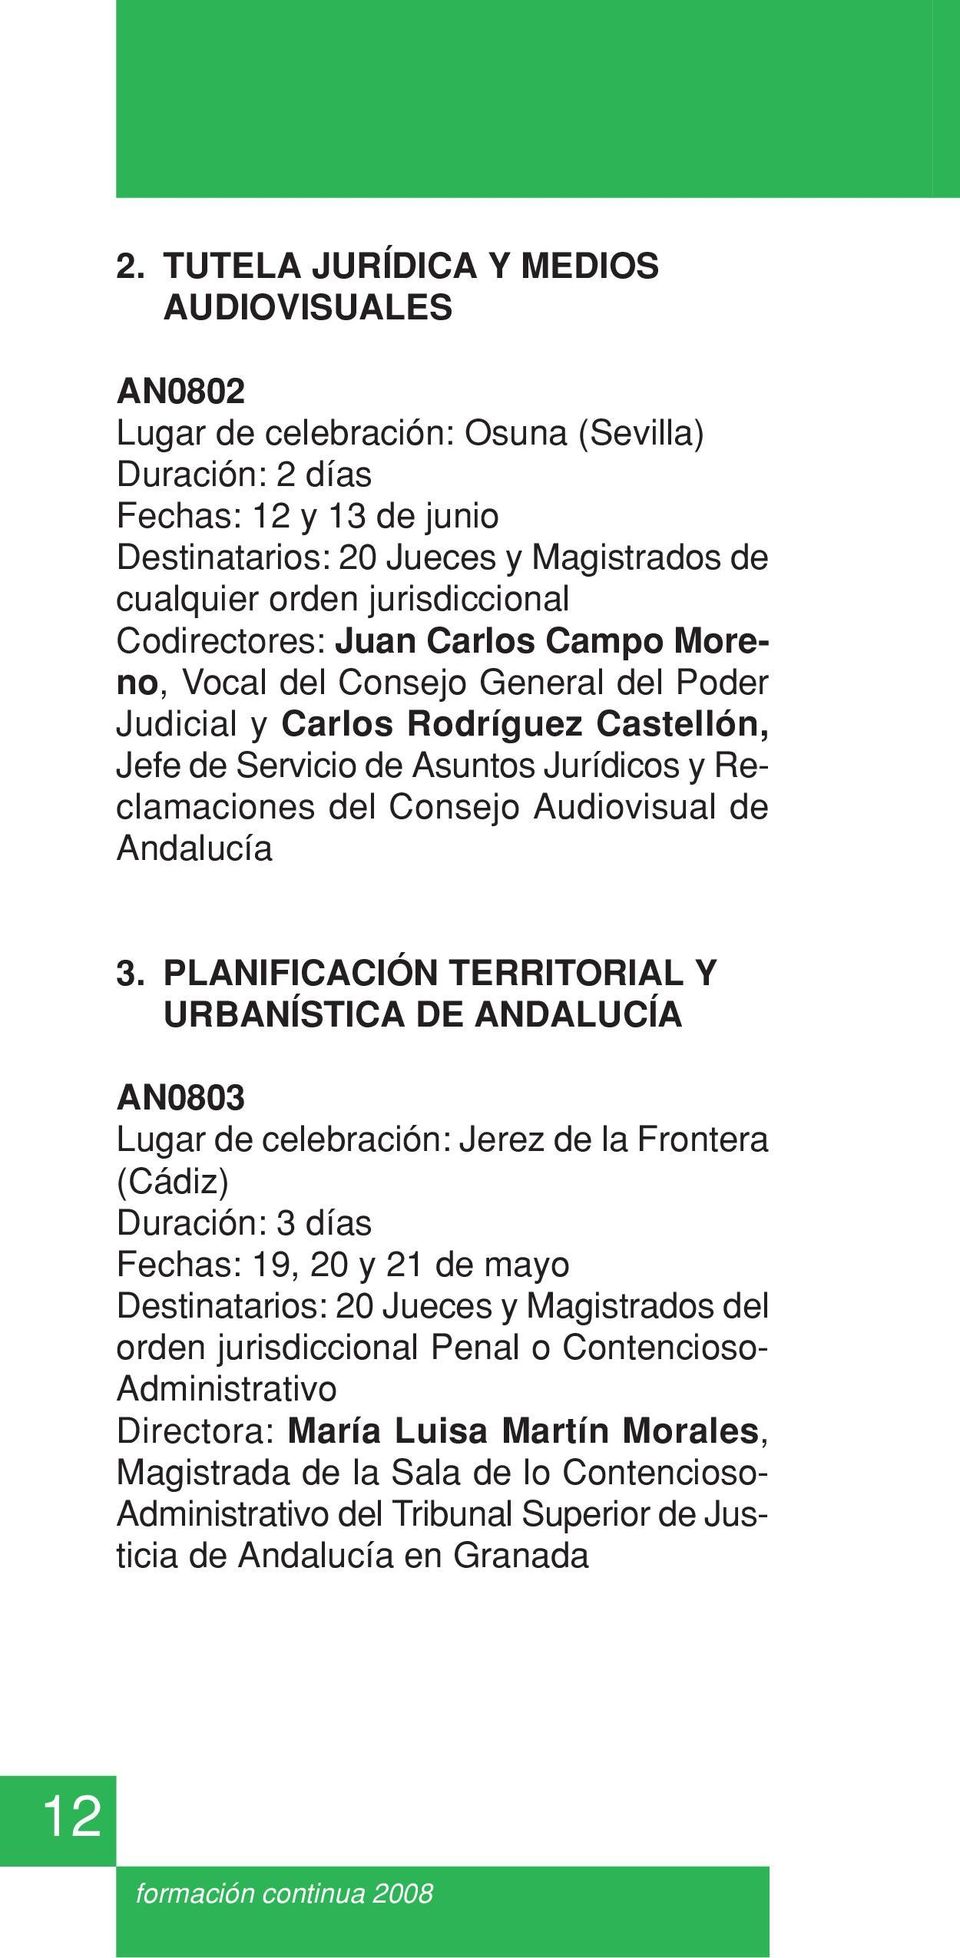 Audiovisual de Andalucía 3.